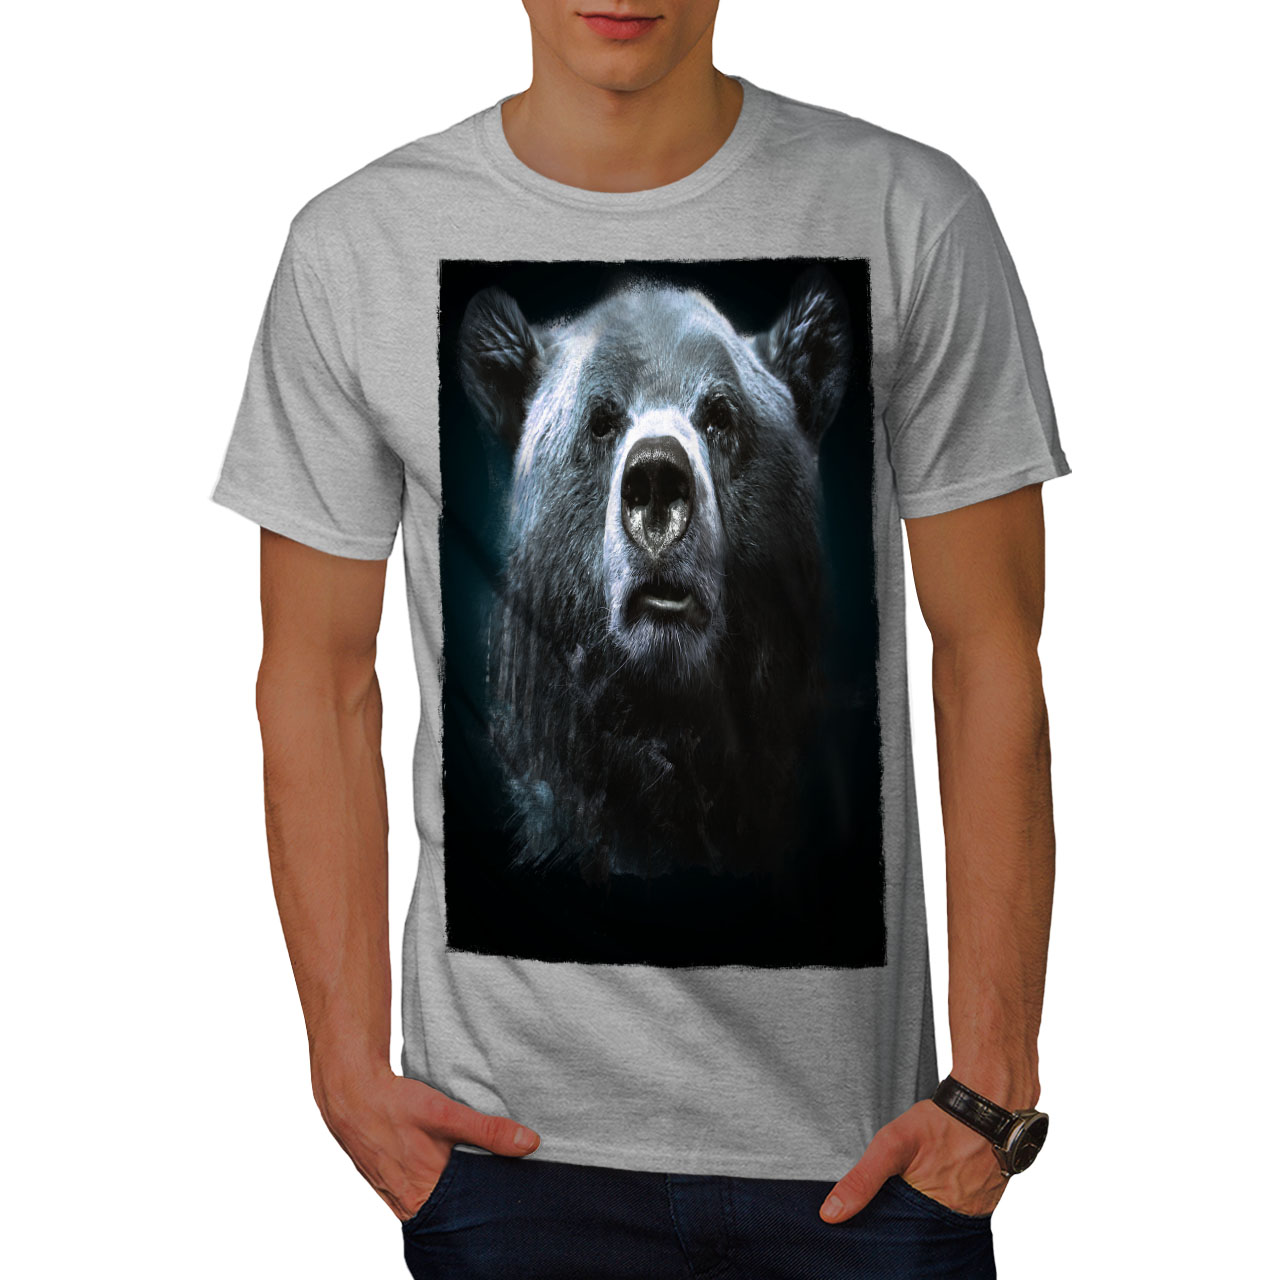 Wellcoda Wild Animal Bear Beast Mens T-shirt Funny Graphic Design Printed Tee 